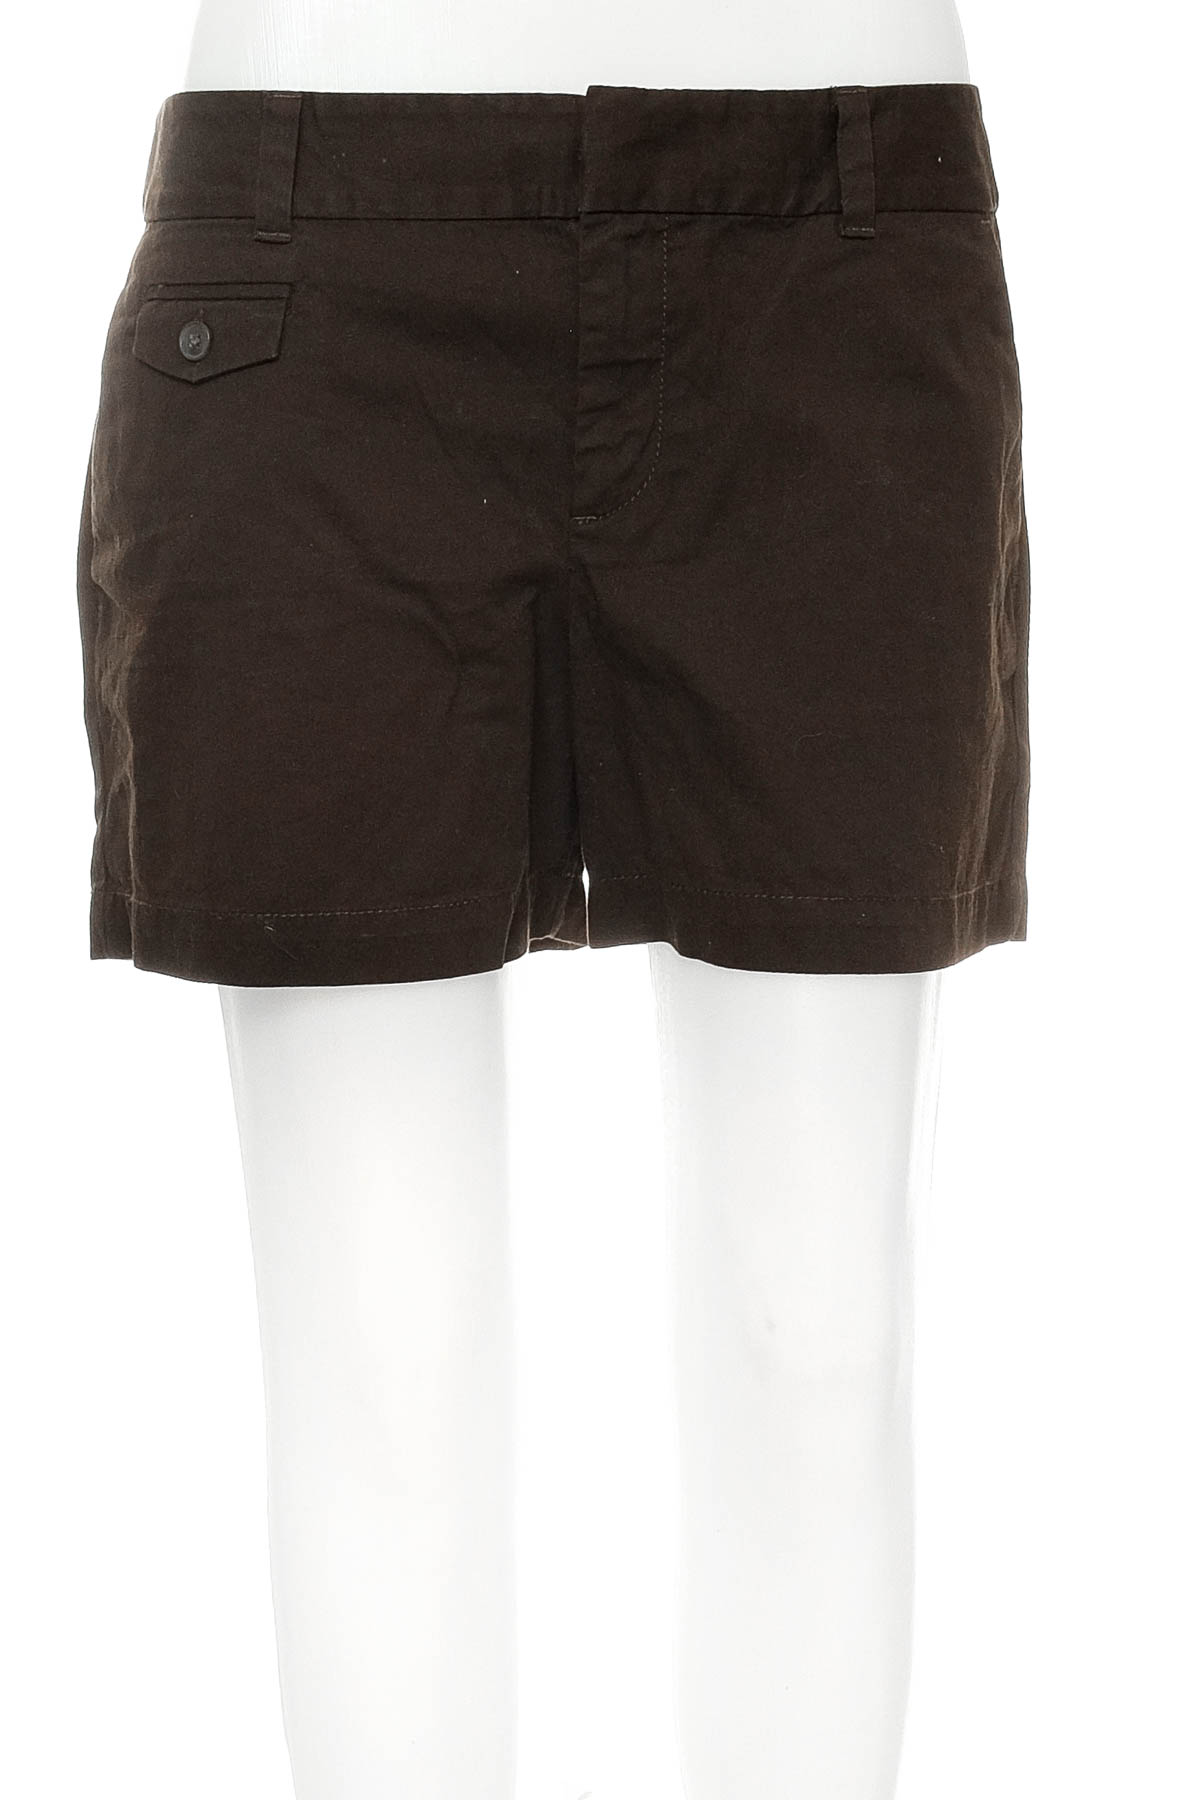 Female shorts - ANN TAYLOR LOFT - 0